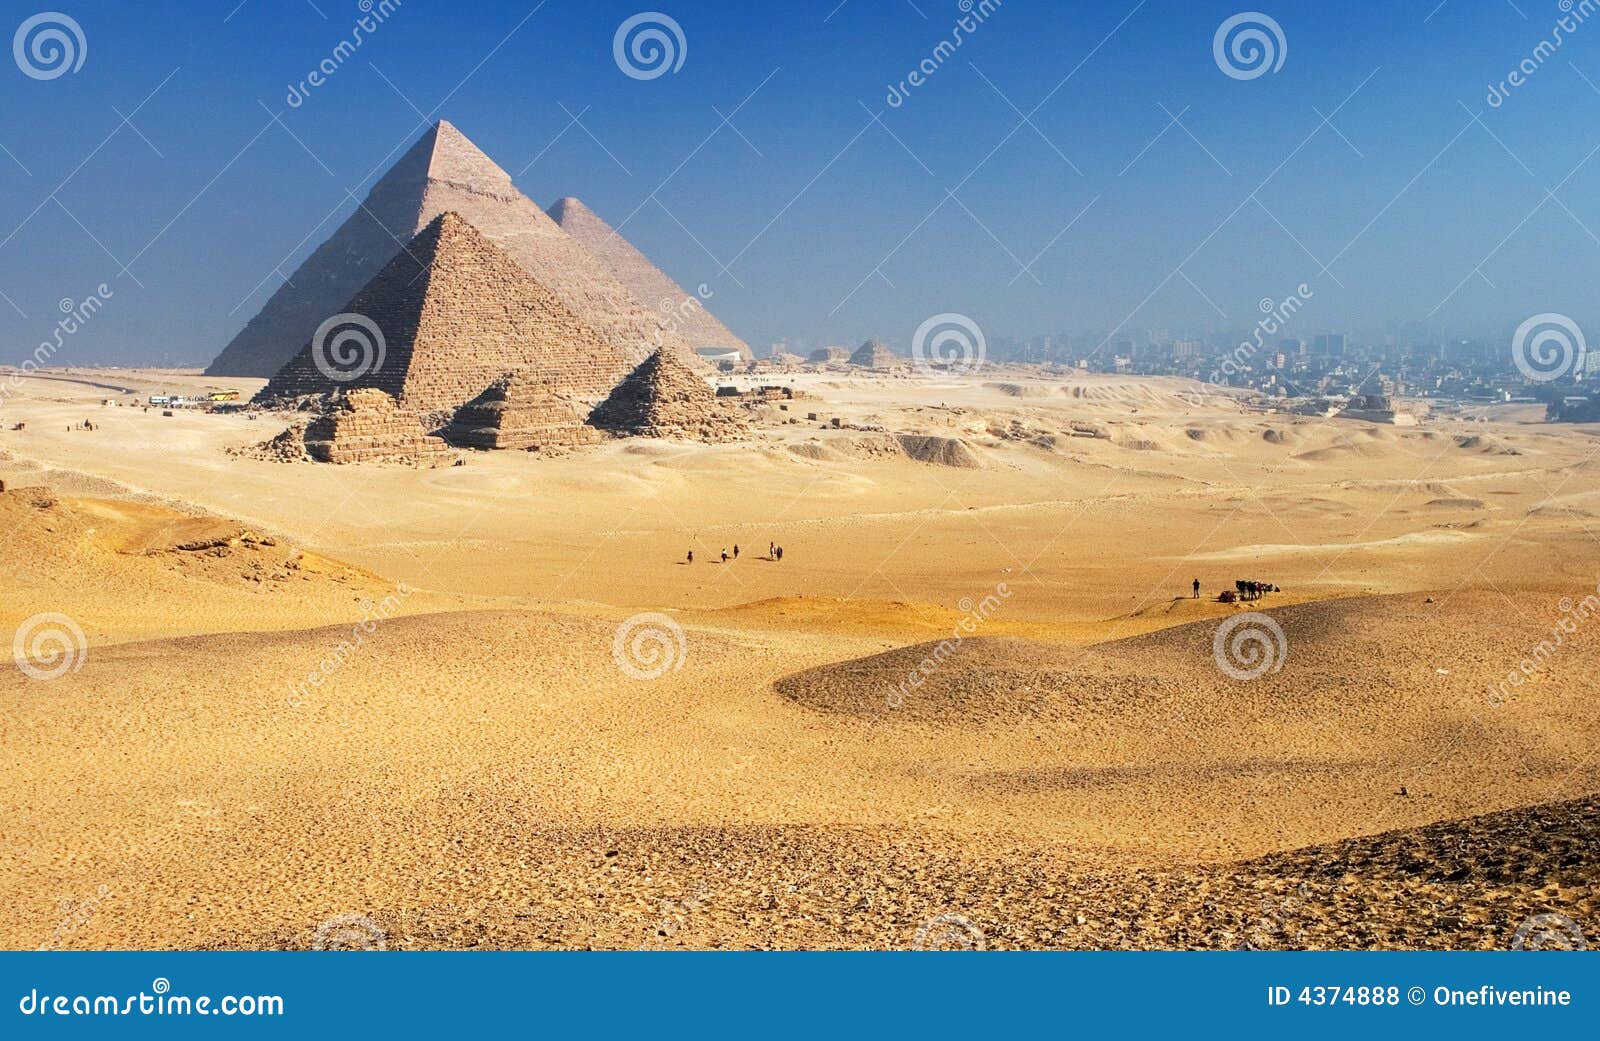 pyramids giza plateau cairo